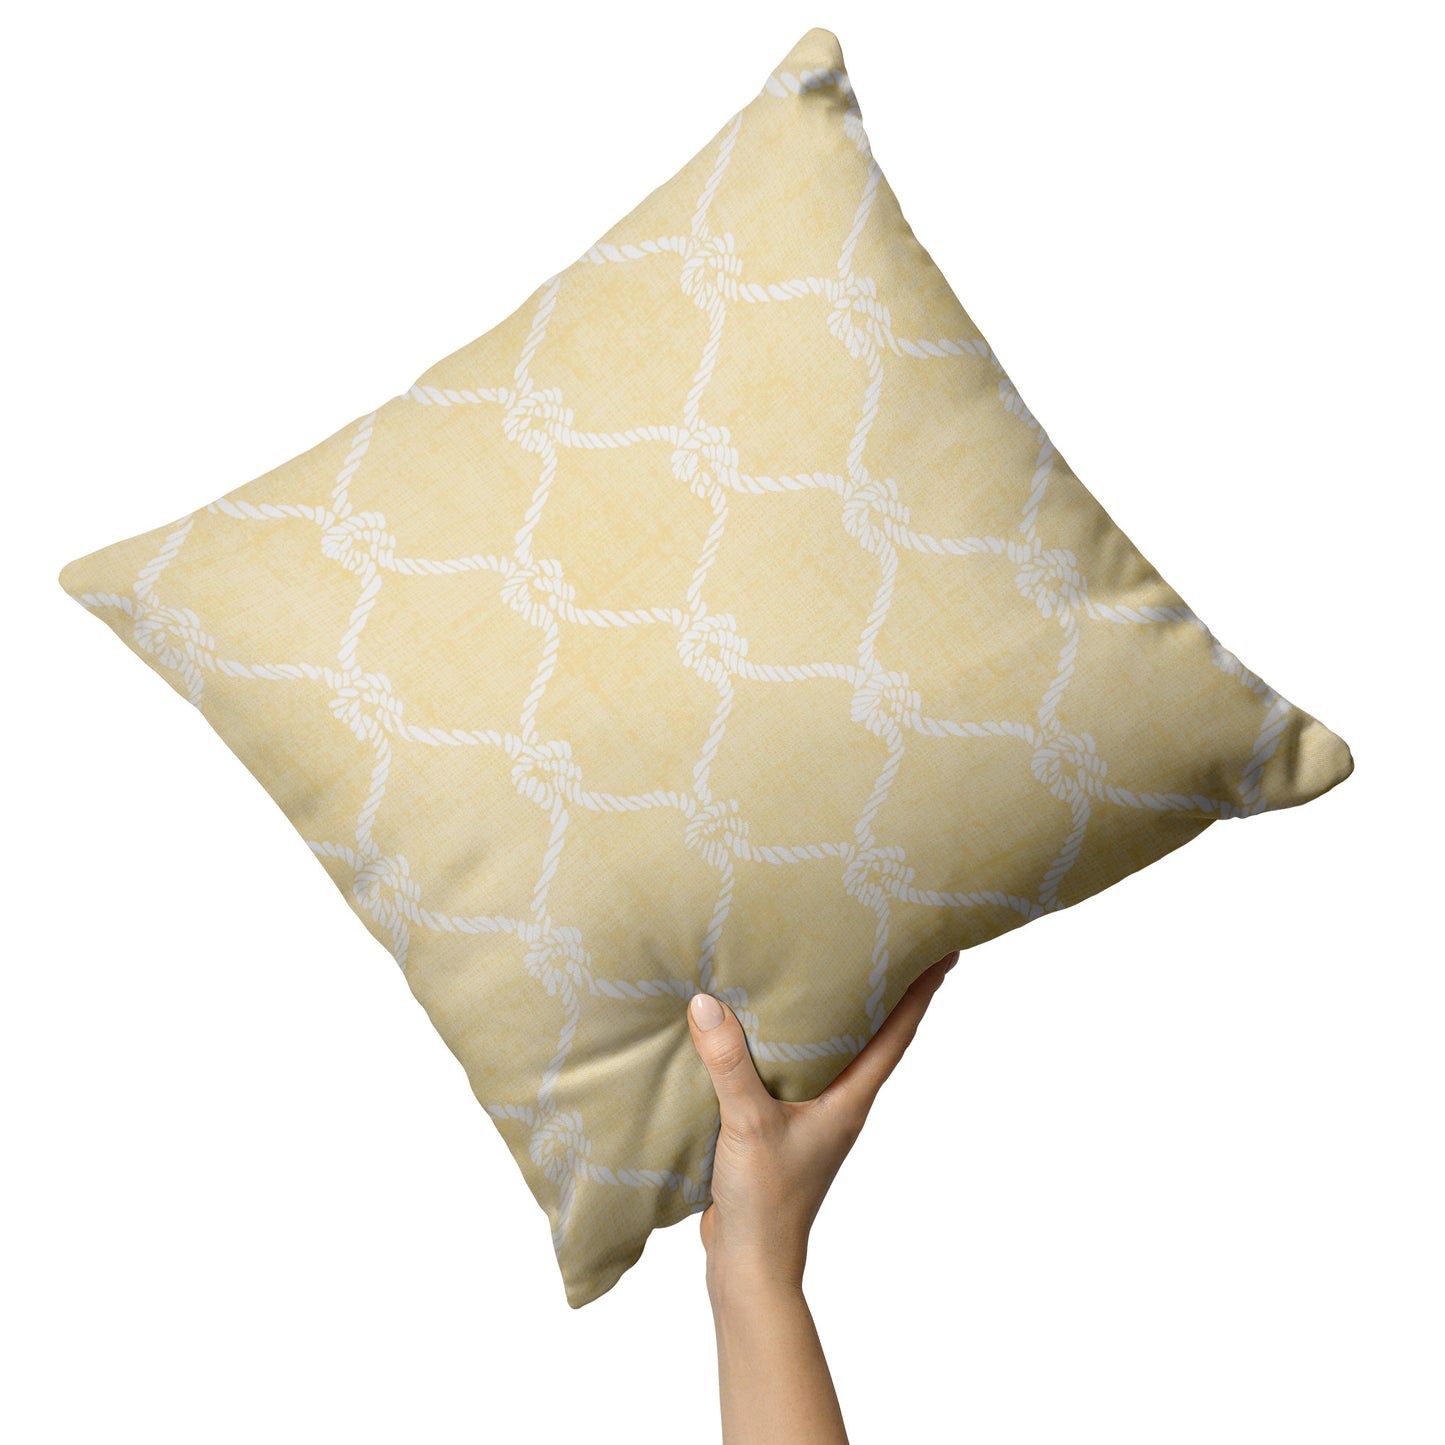 Nautical Netting Design on Yellow Linen Textured Background, Throw Pillow